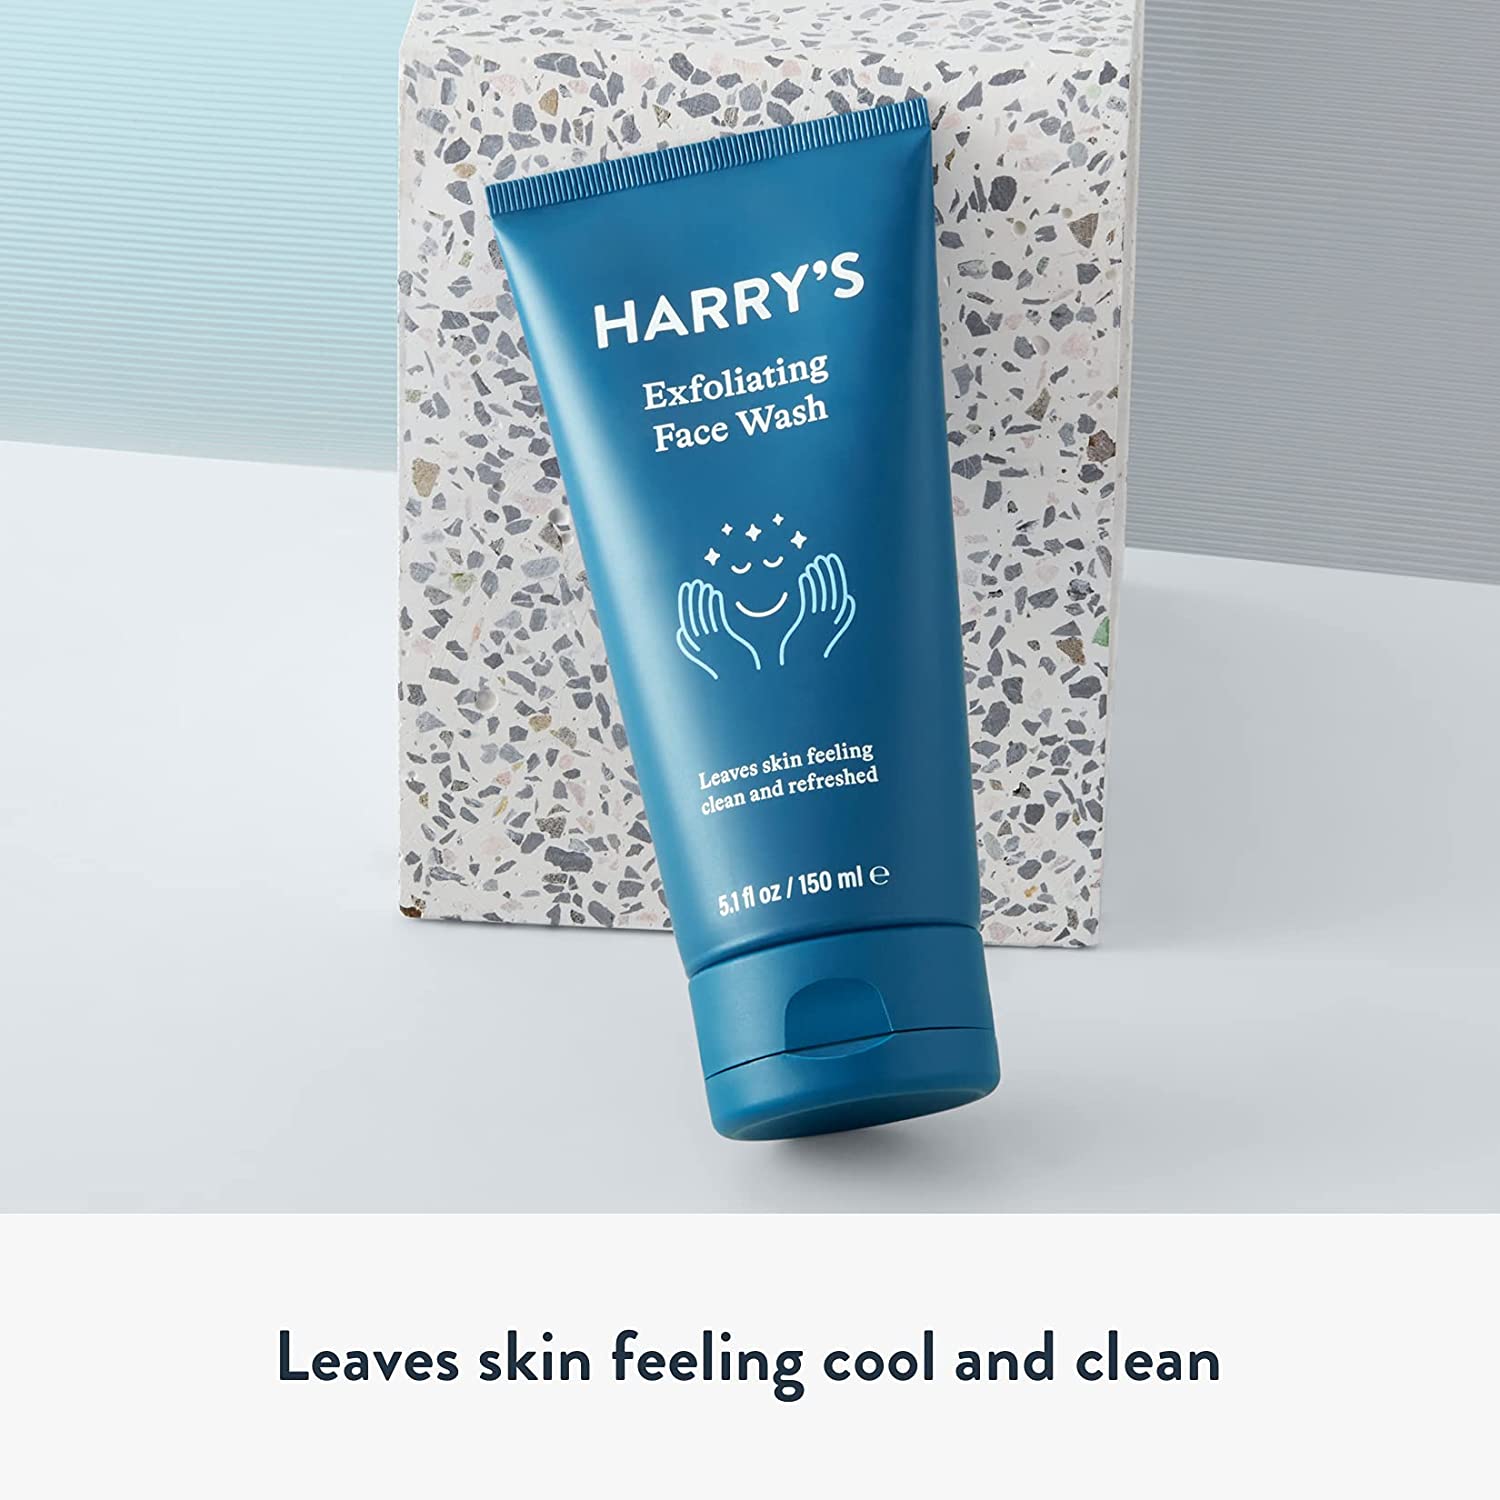 Harry's face wash for men